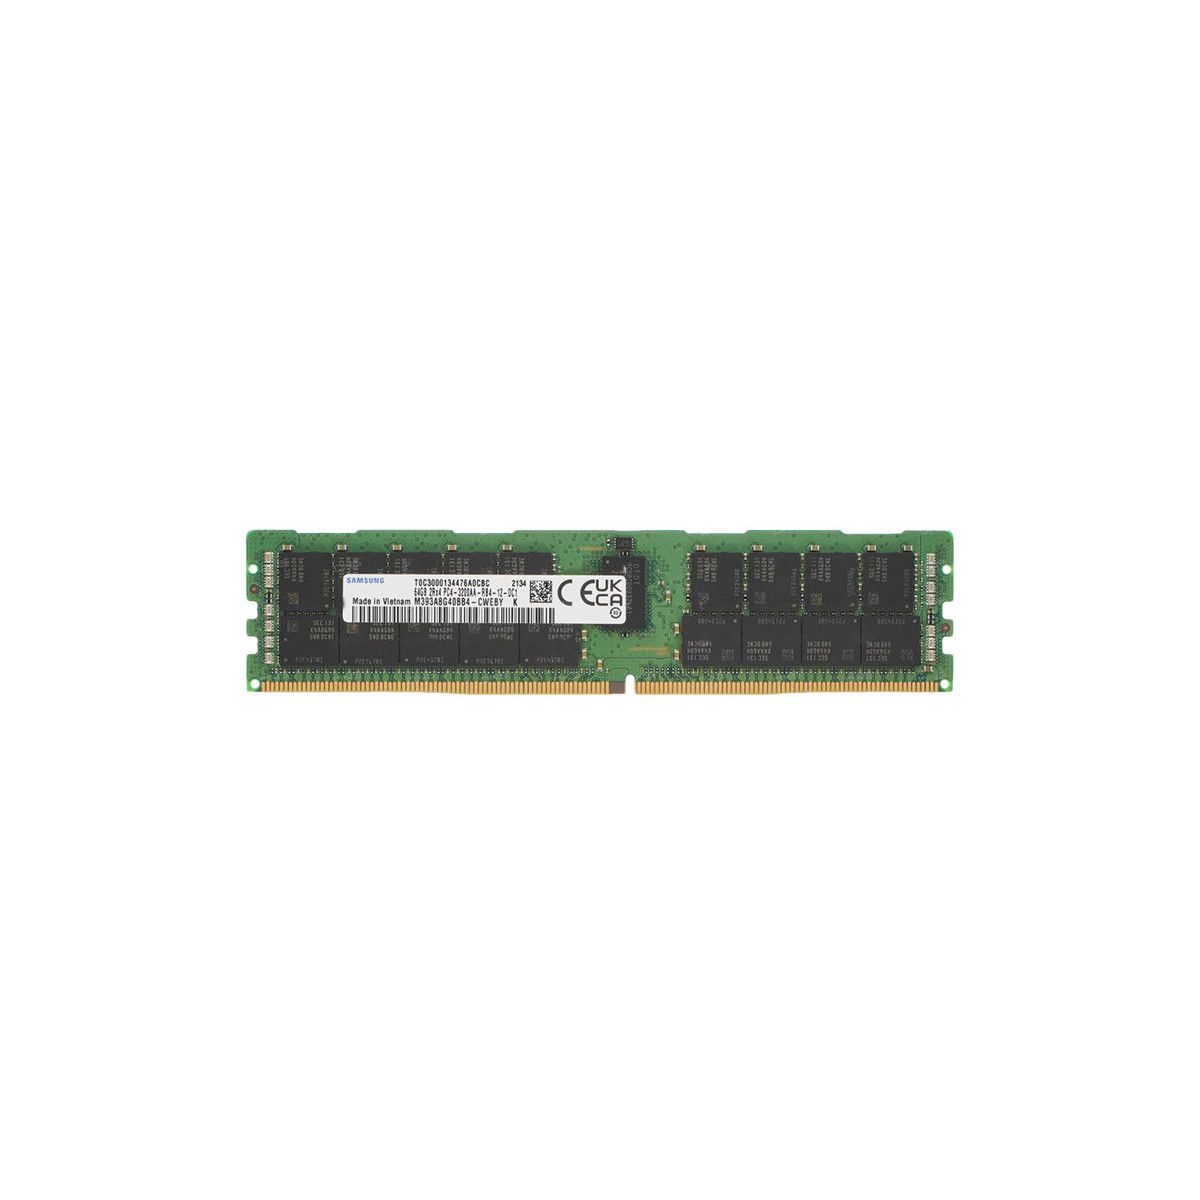 UCS-MR-X64G2RW-MS - Memstar 1x 64GB DDR4-3200 RDIMM PC4-25600R - Mem-Star compatibel OEM geheugen 1 - Memstar 